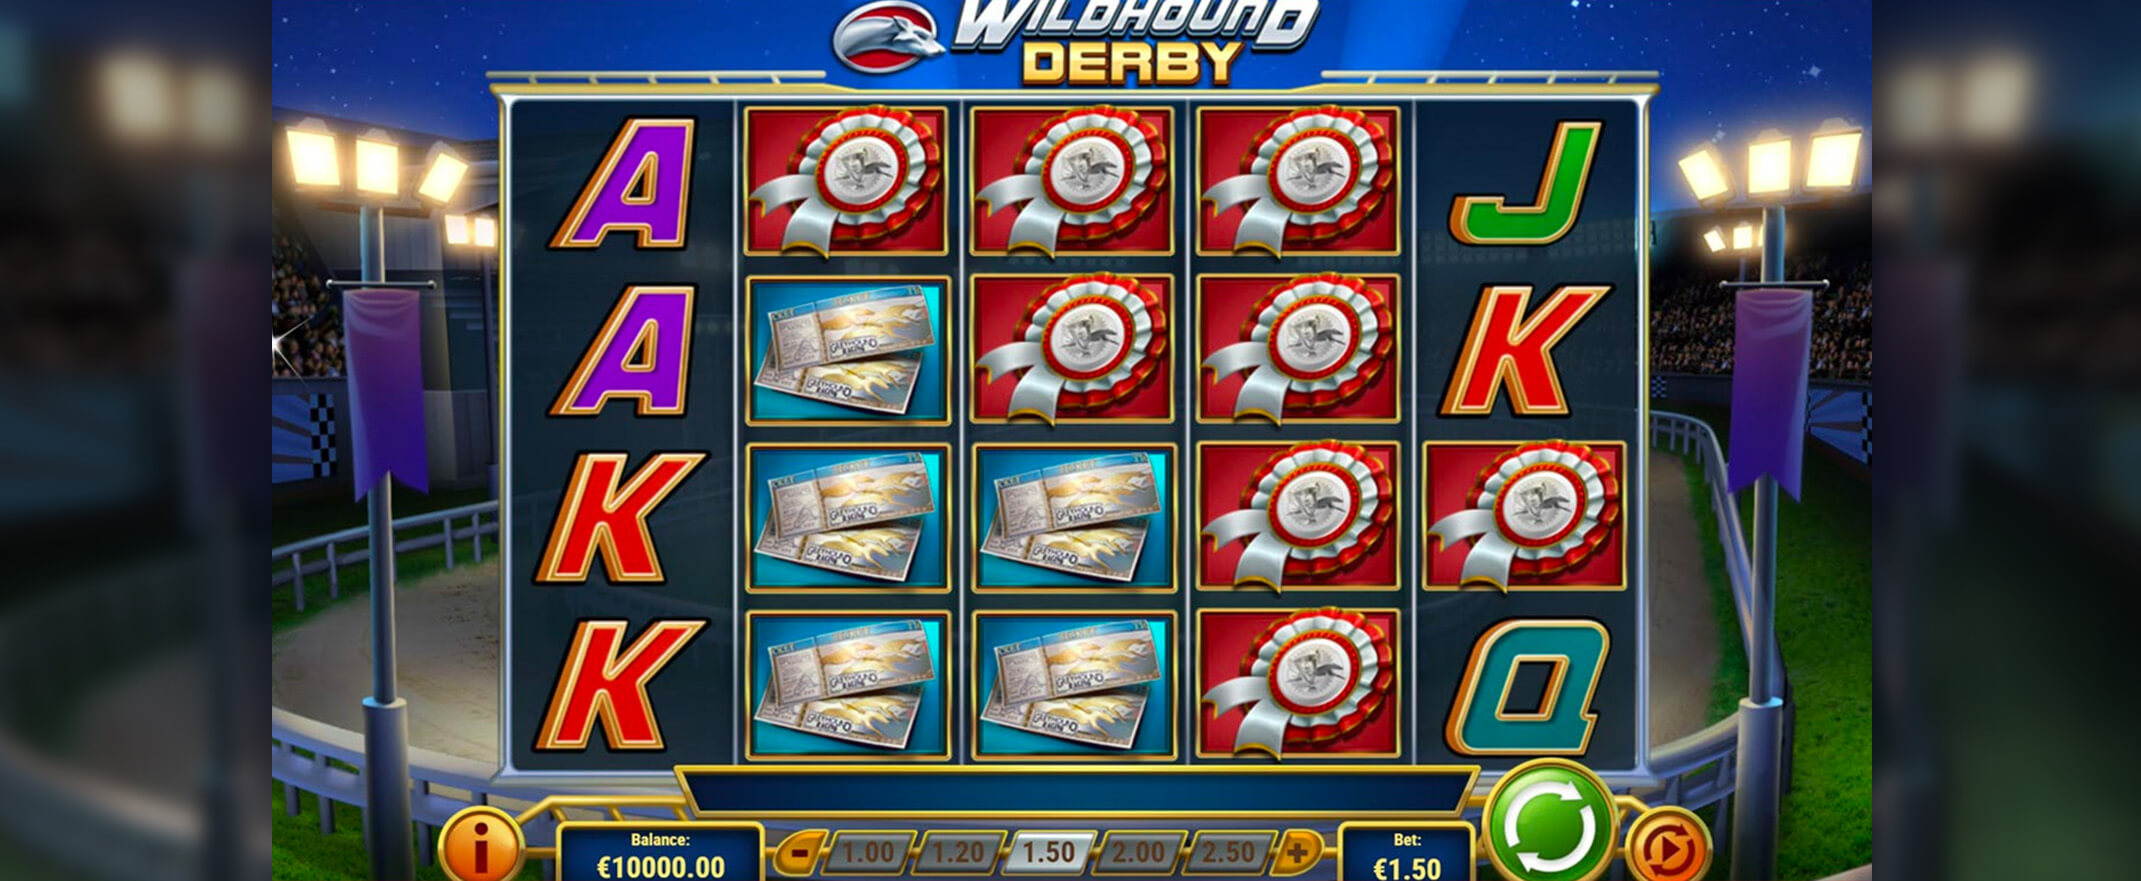 Wildhound Derby peliautomaatti Play'n Golta